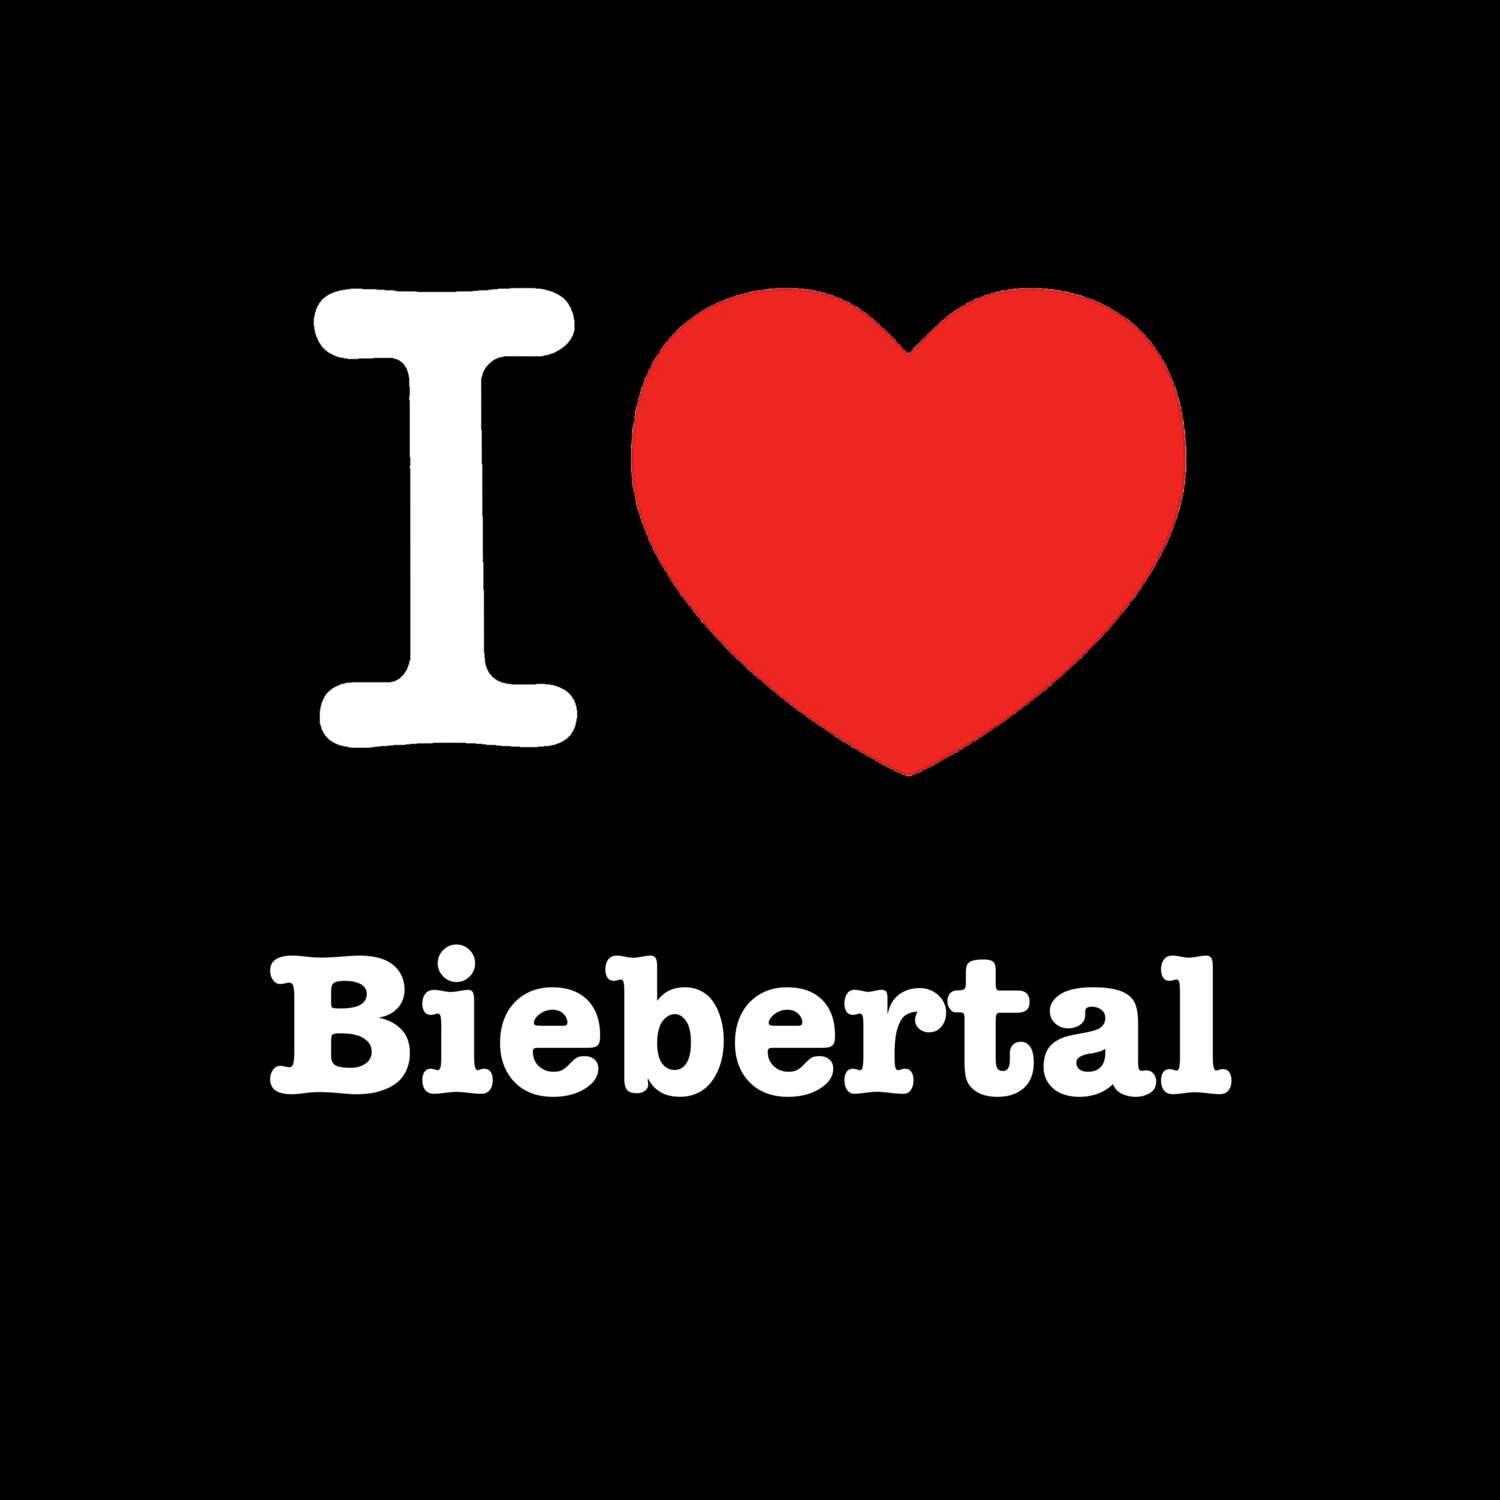 Biebertal T-Shirt »I love«